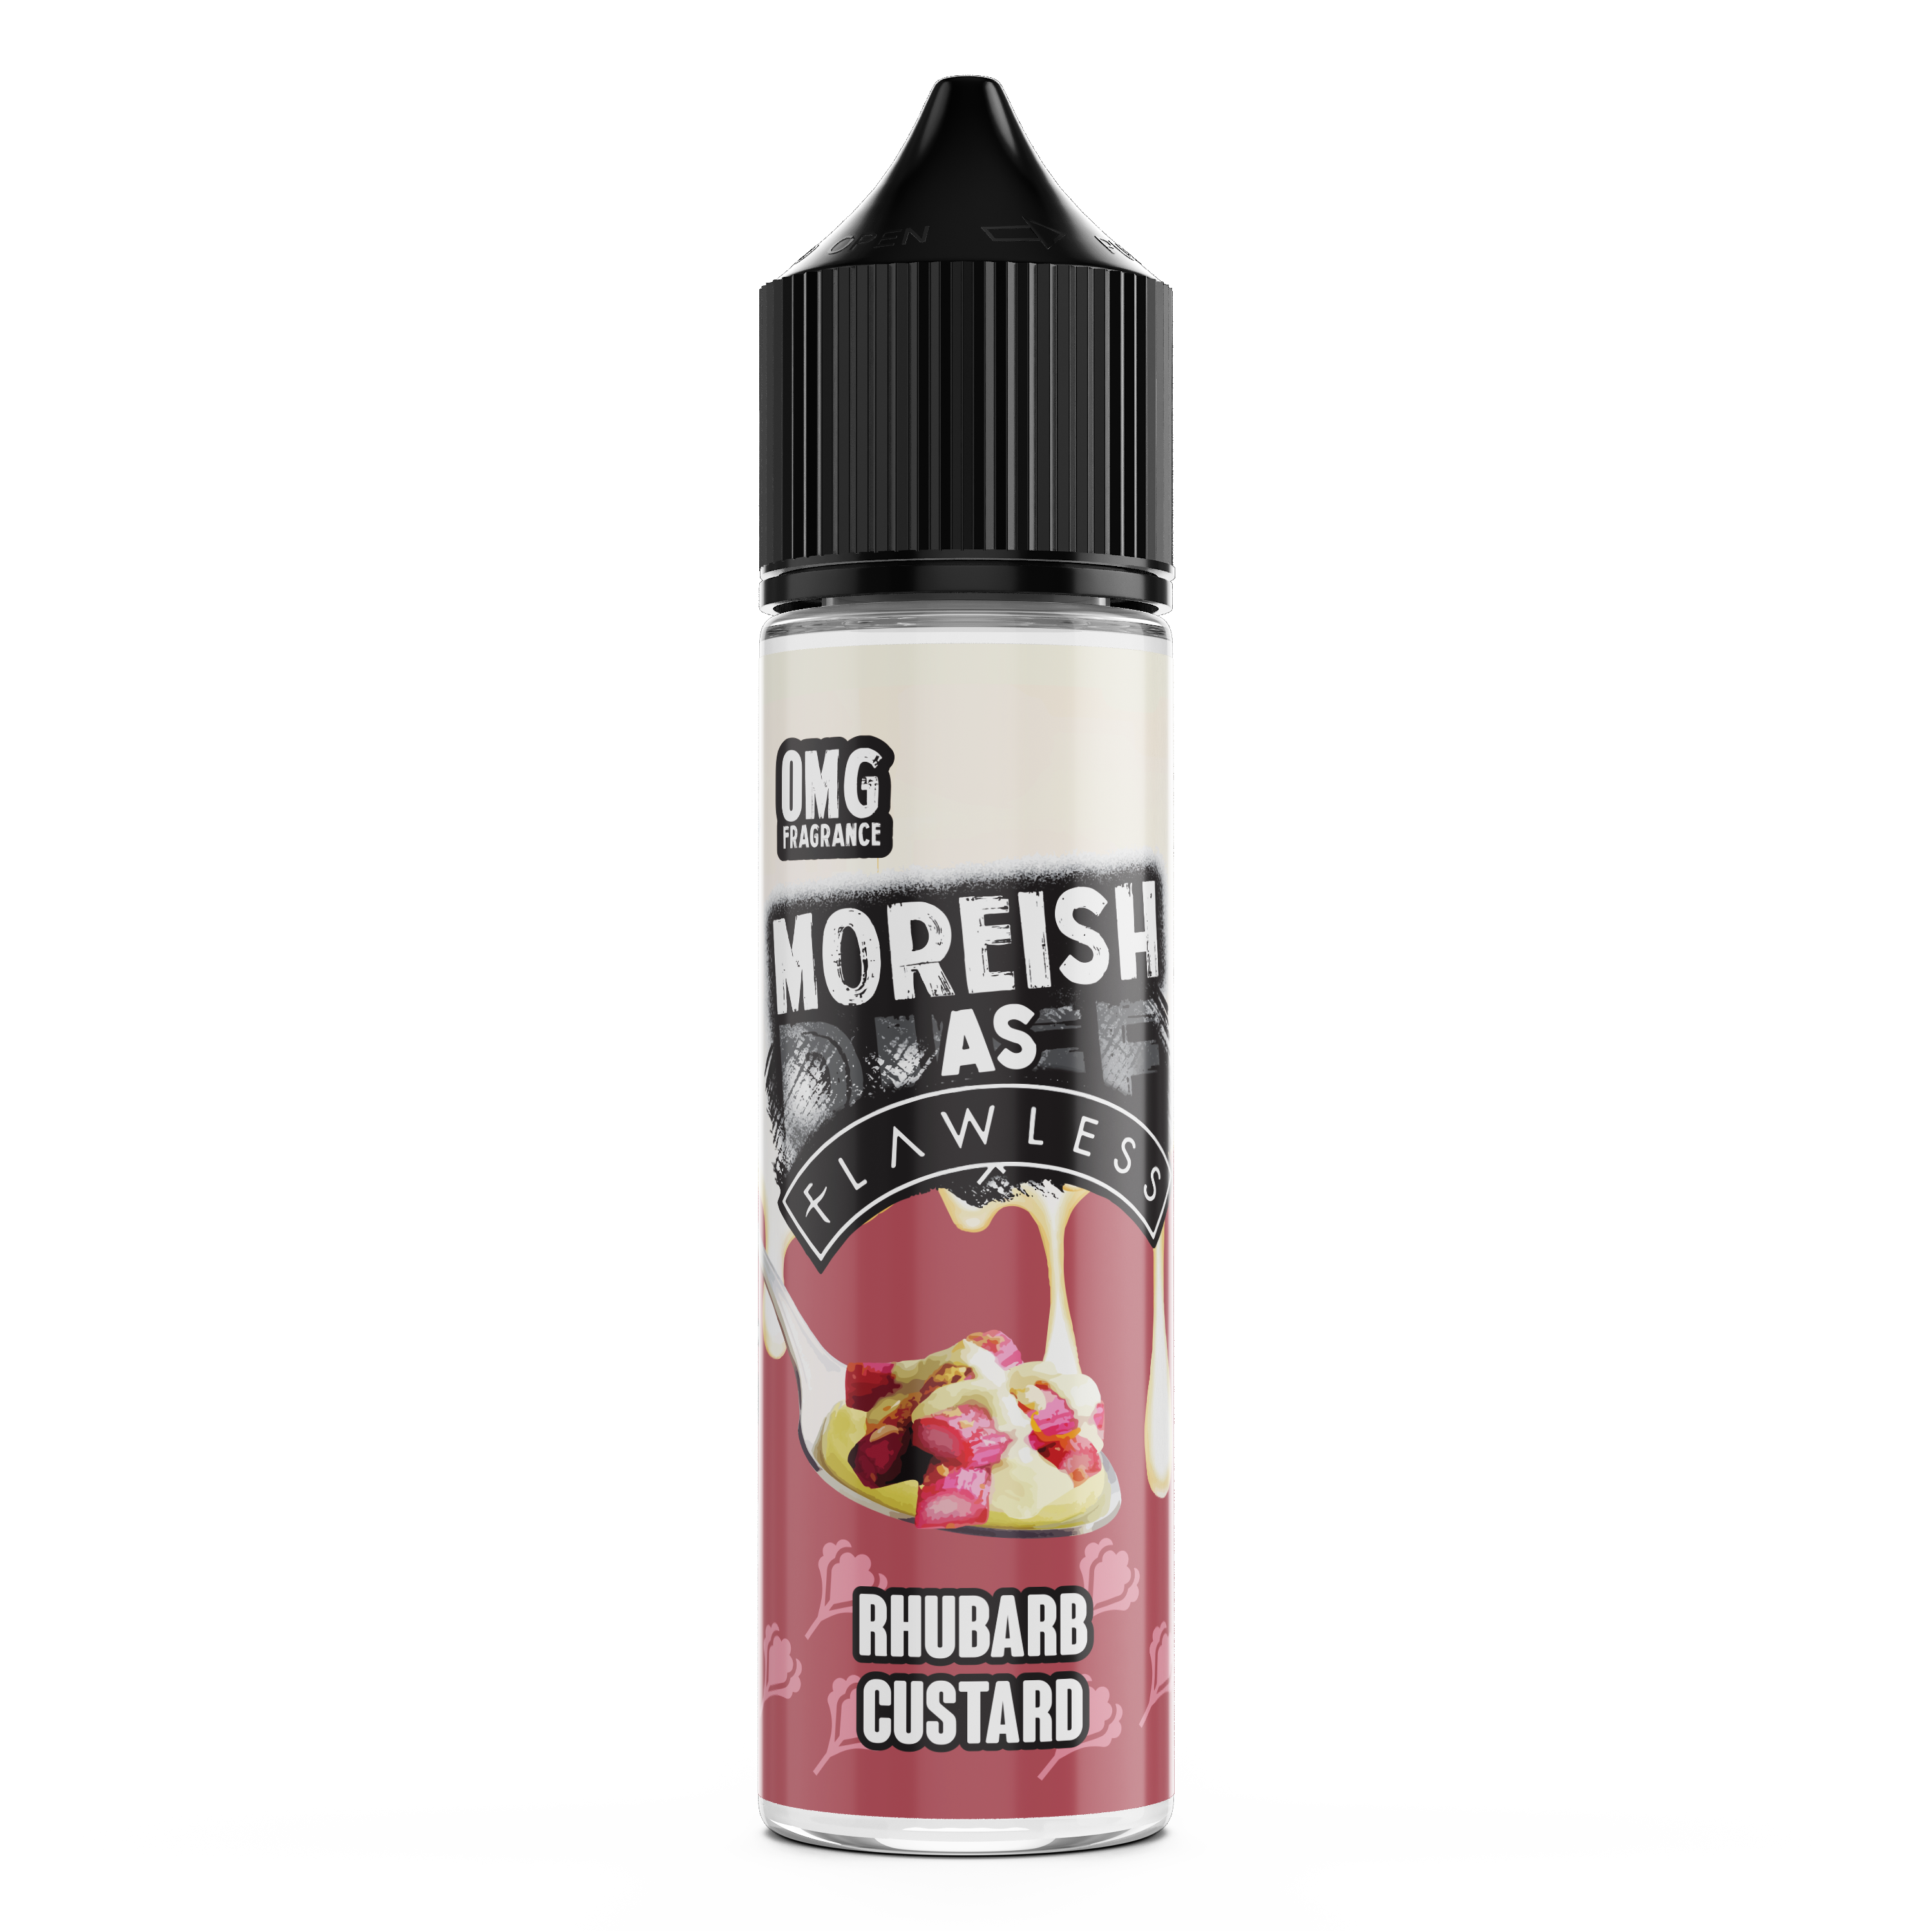 Moreish as Flawless Rhubarb Custard 50ml Shortfill E-liquid